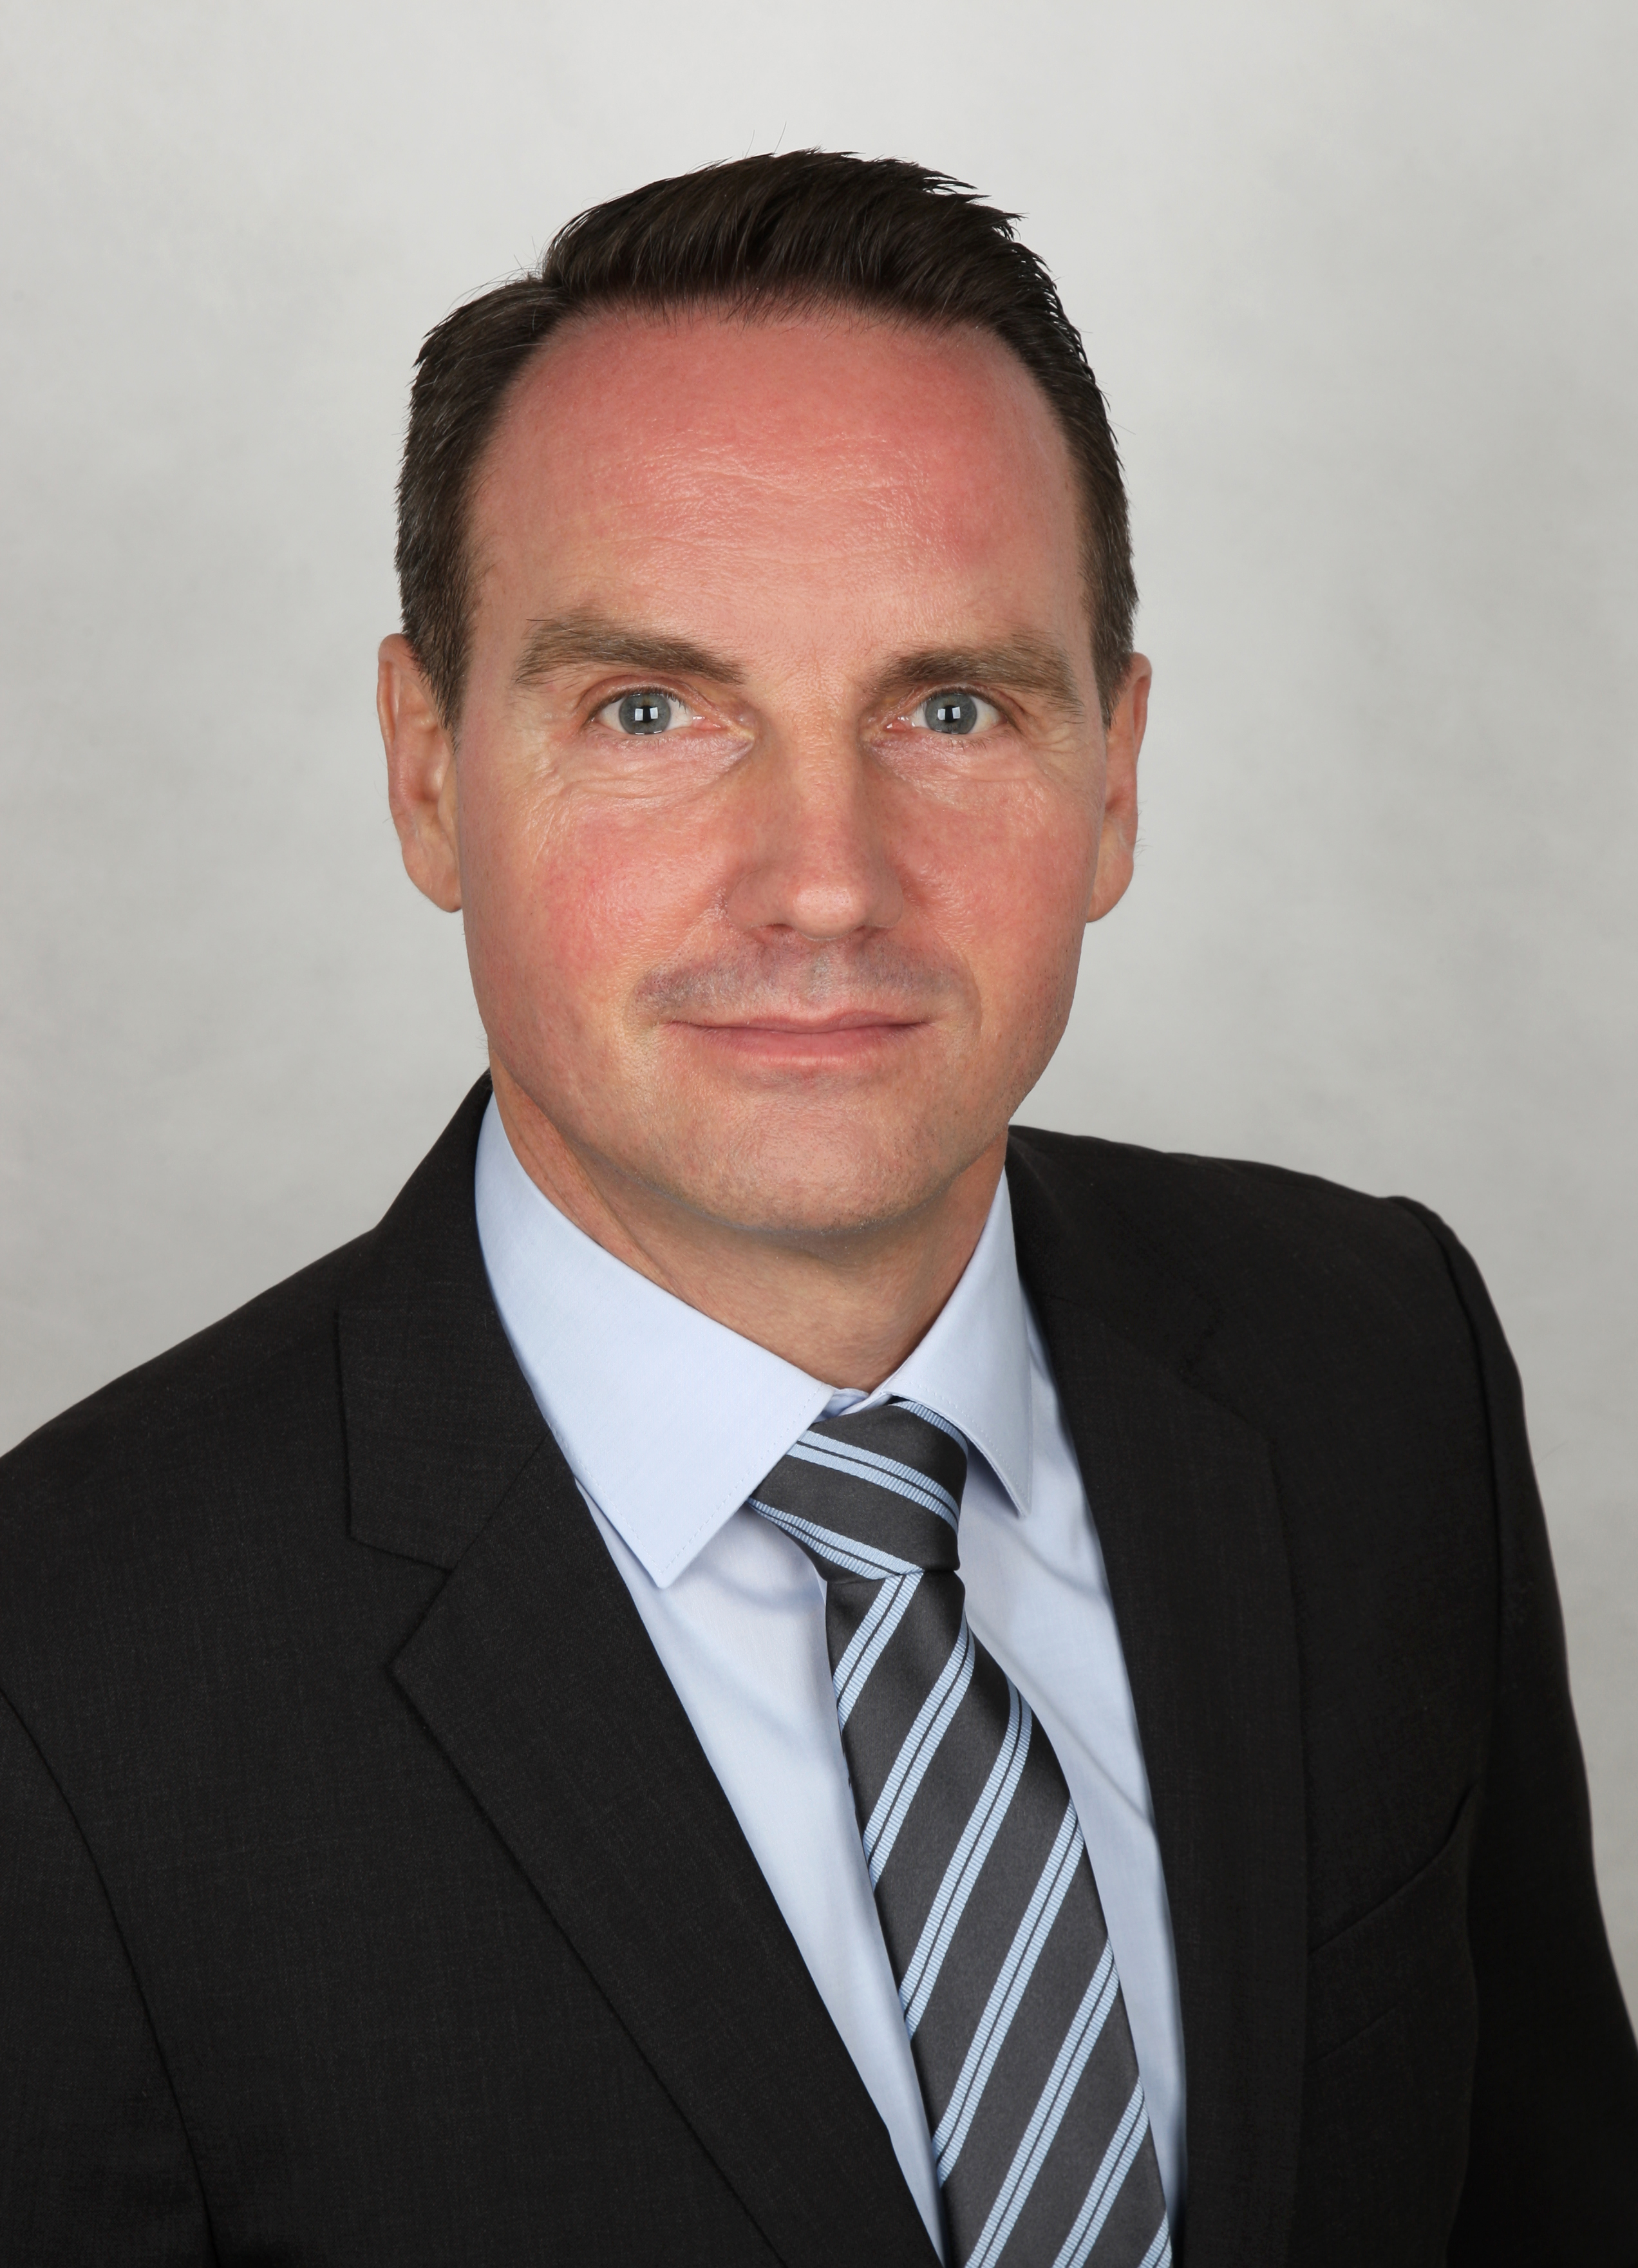 Uwe Kellner, managing director of Maag Ettlinger.